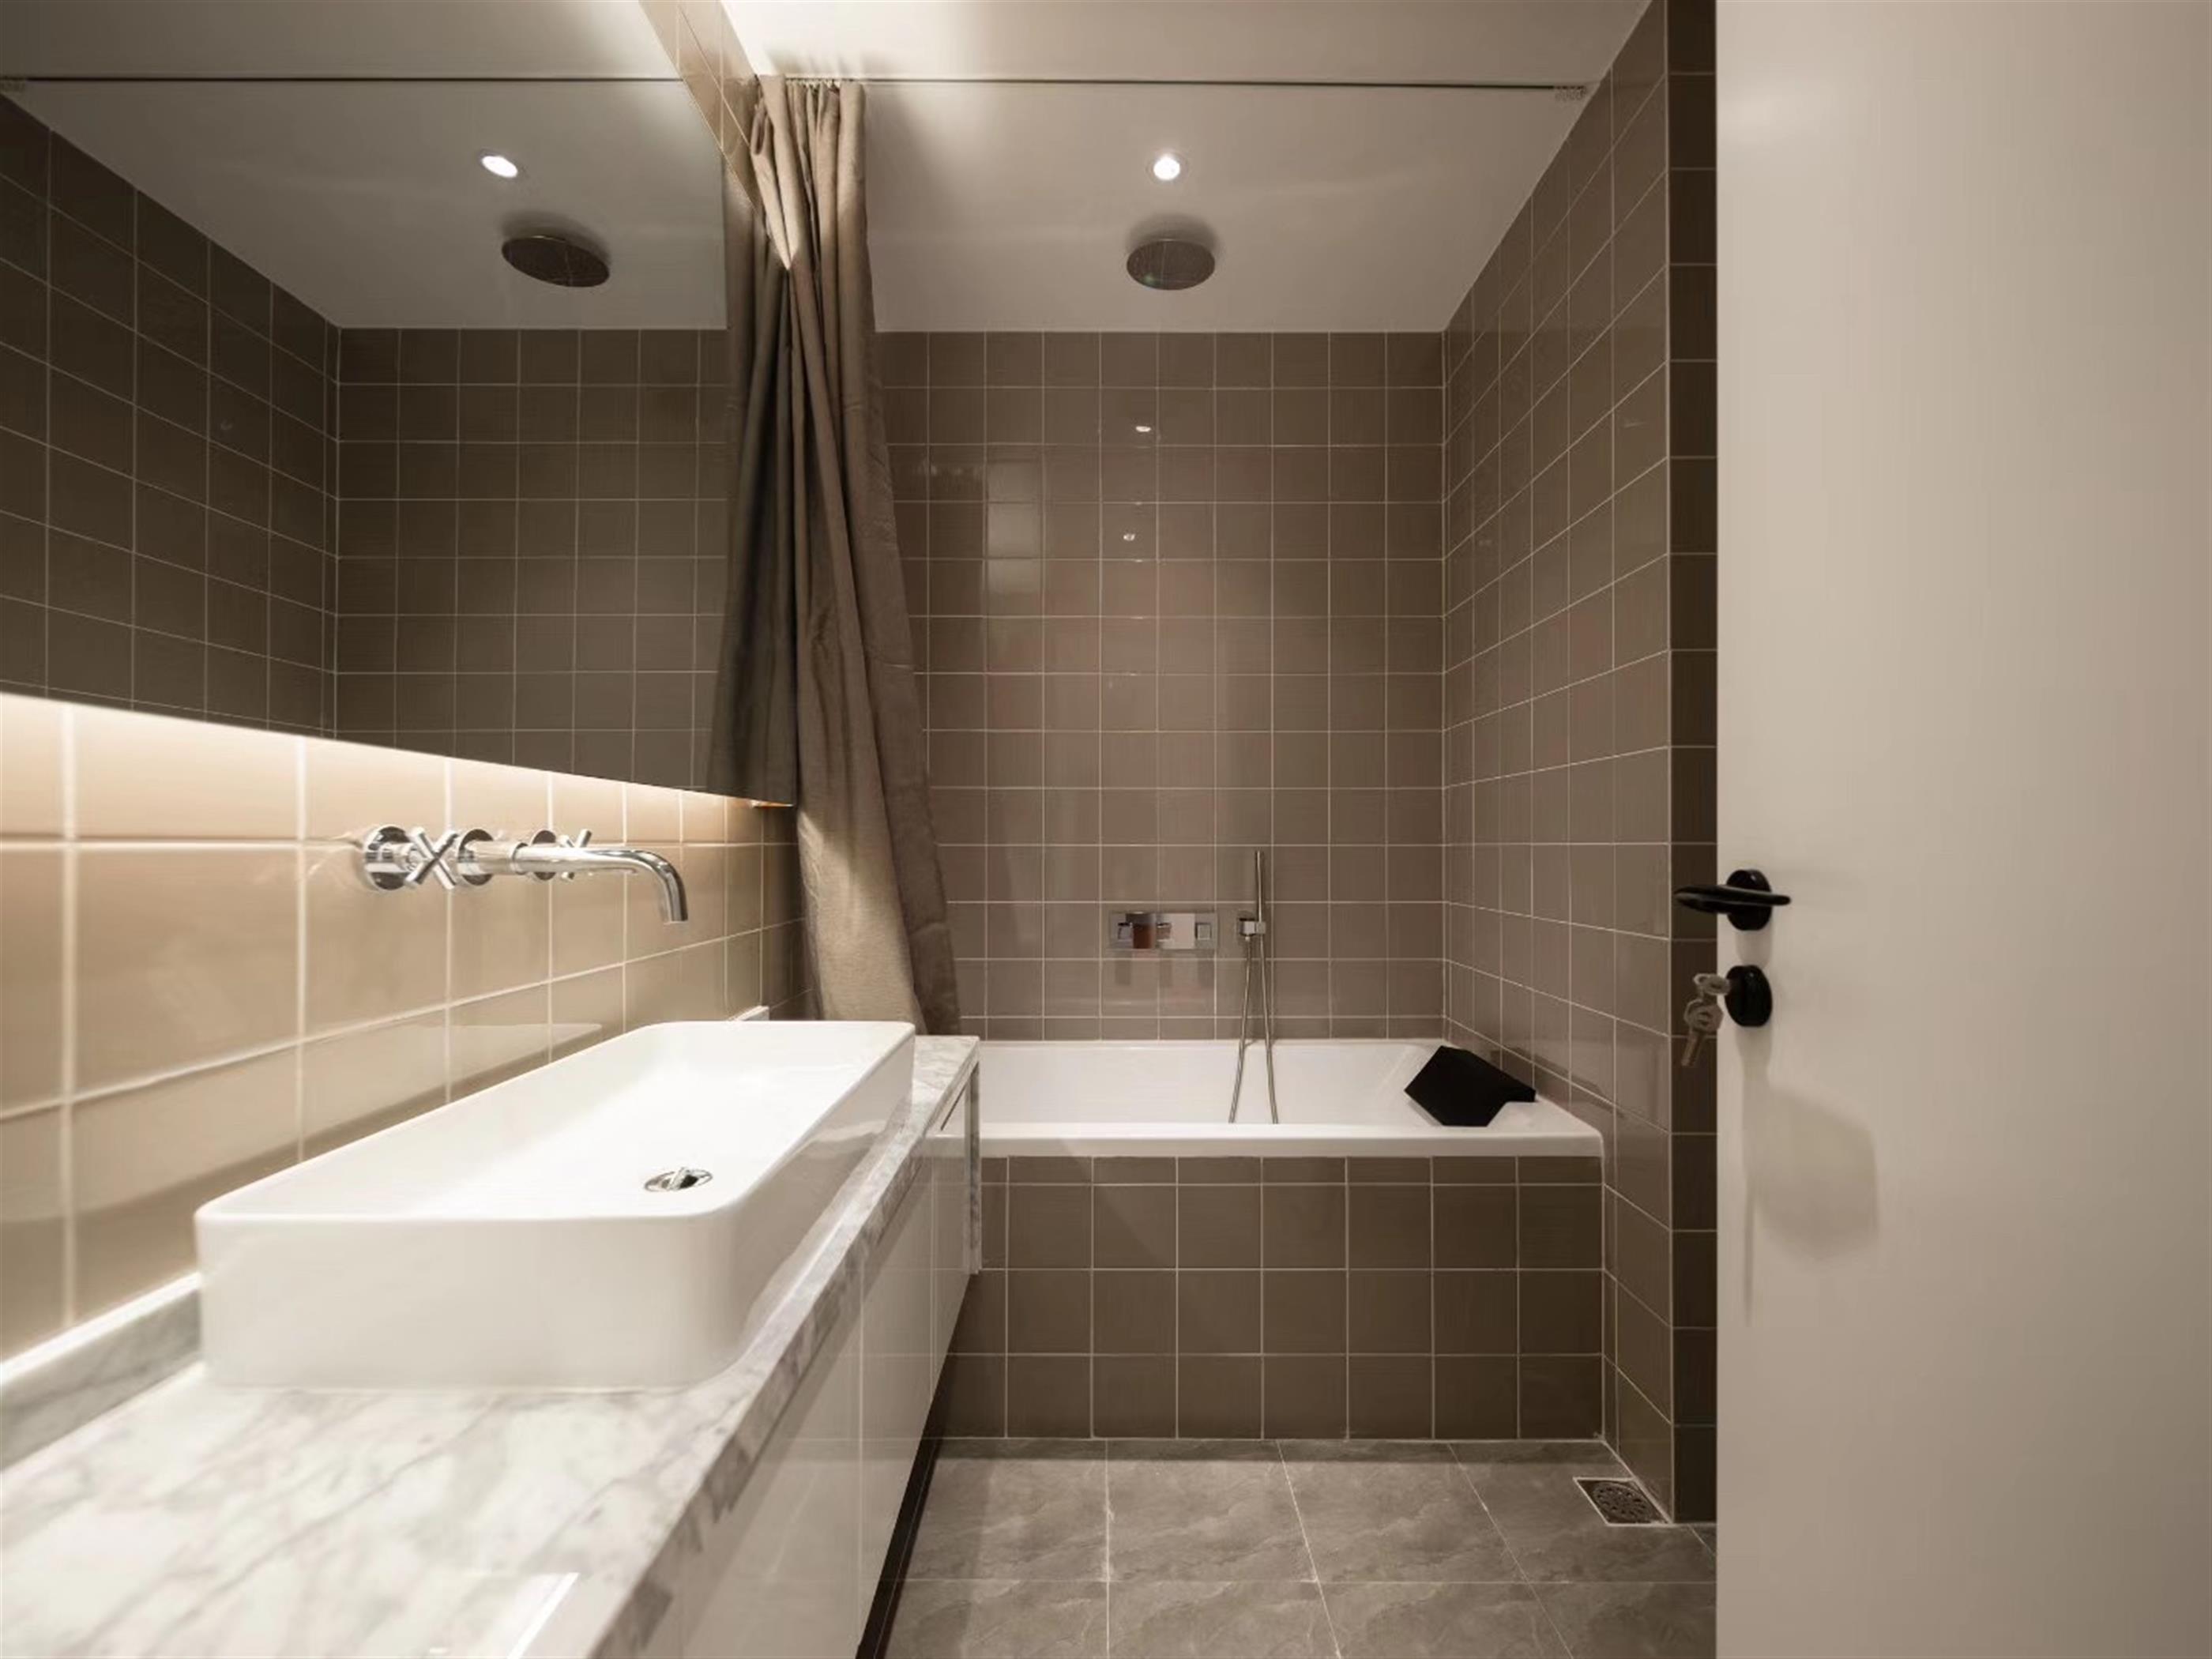 bathtub Newly Renovated Chic Modern 170sqm 3BR Apartment for Rent nr Suzhou Creek in Shanghai